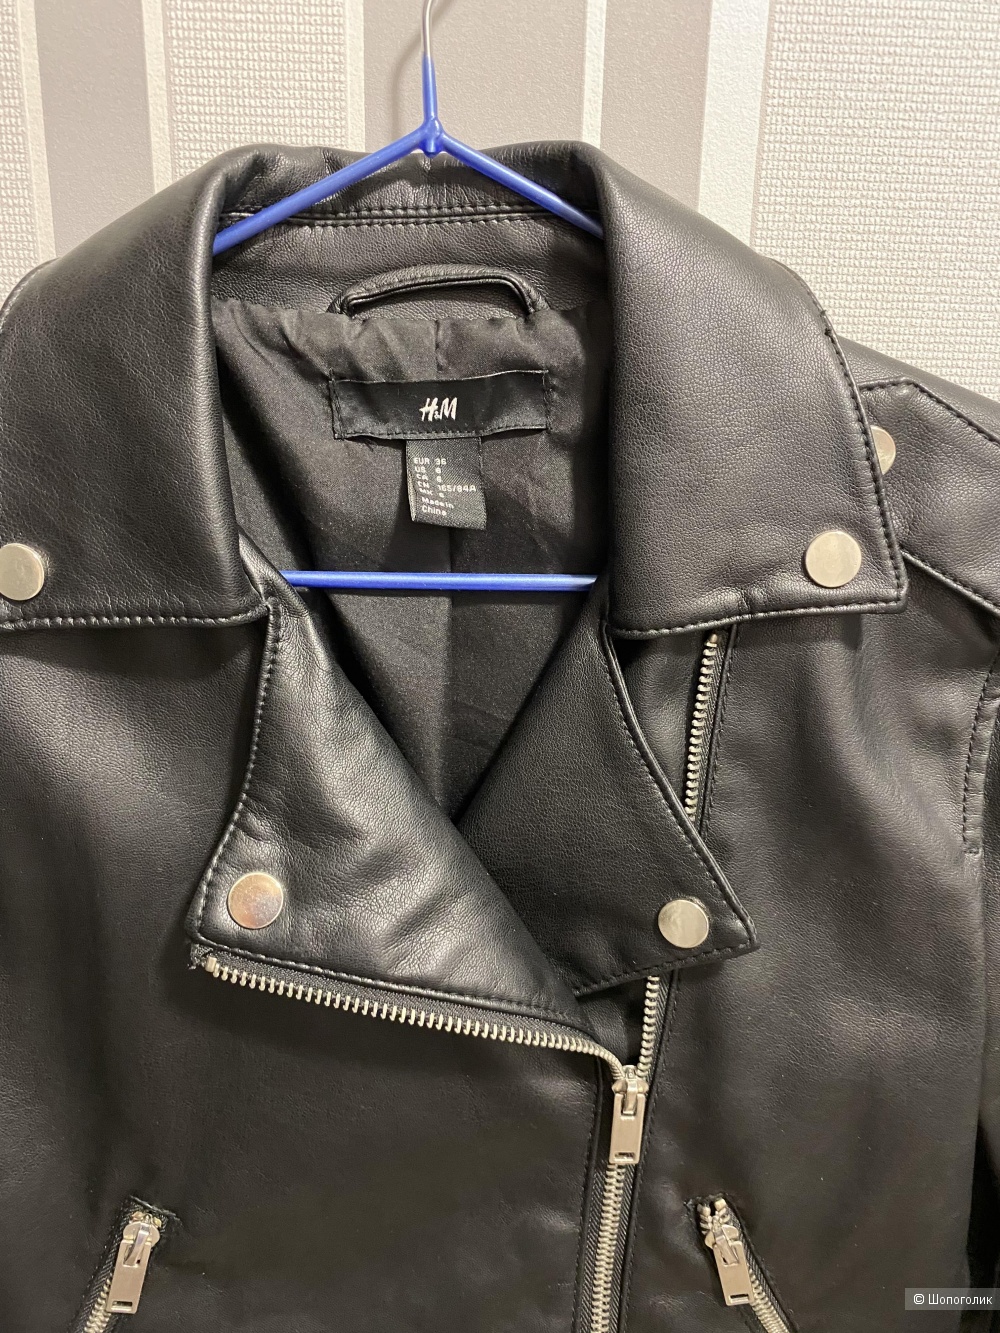 Кожаная куртка косуха H&M, размер 36 (русский 42-44)